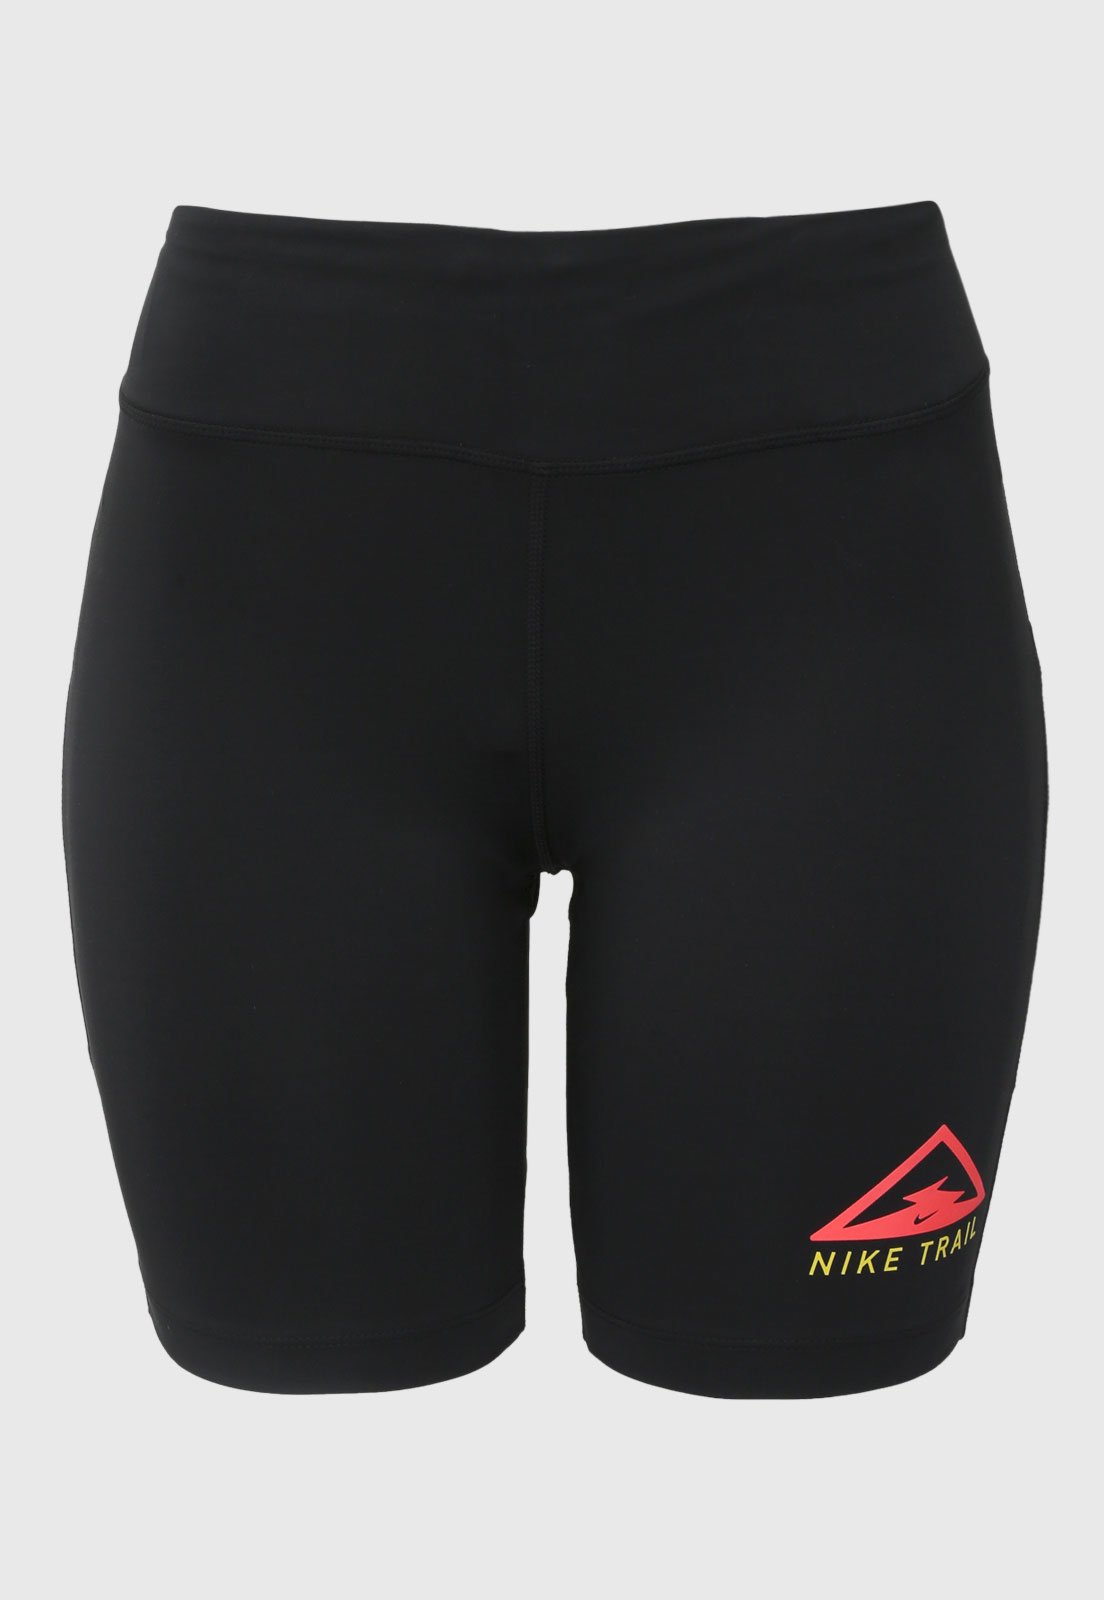 Shorts Nike Fast Masculino - Preto